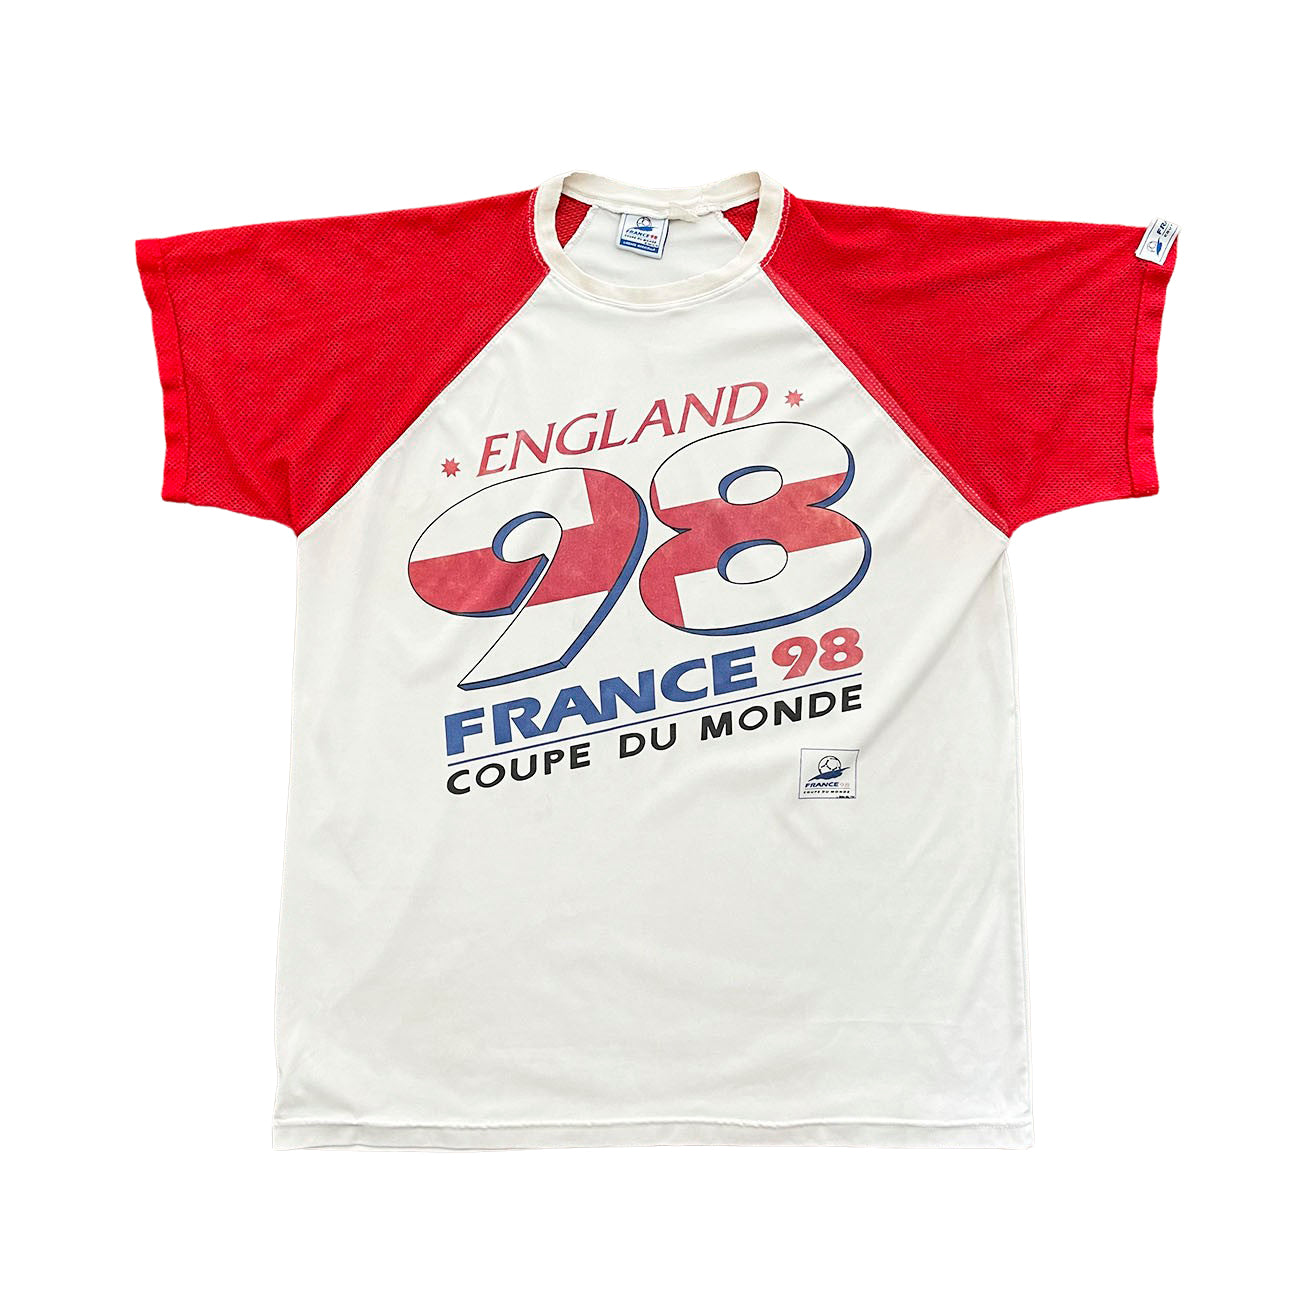 France 98 England Mesh Sleeve Shirt - XL